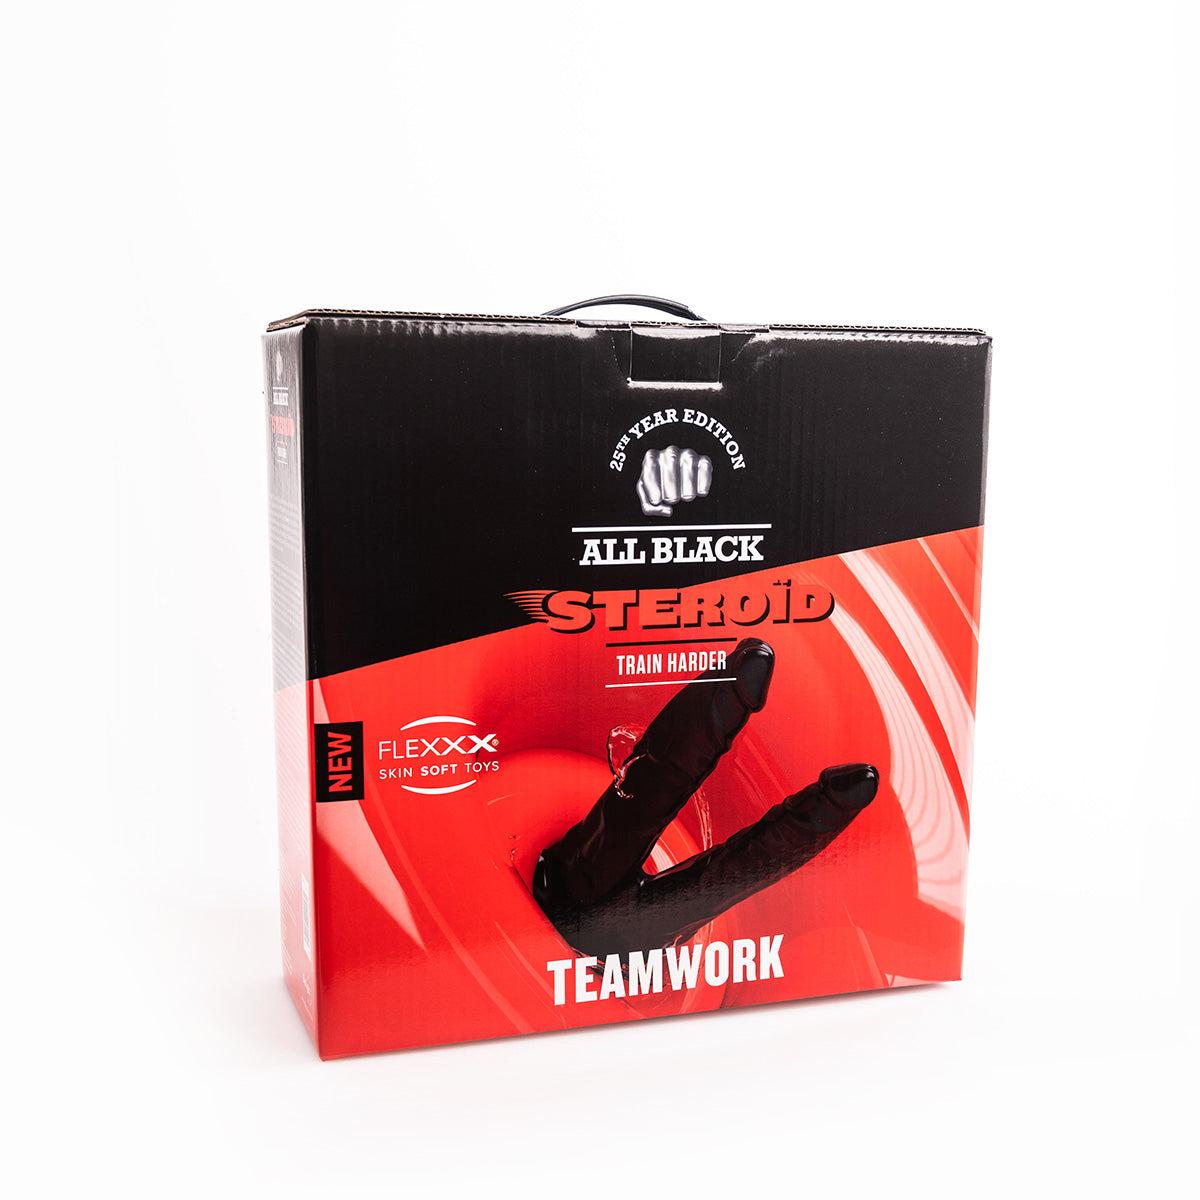 All Black Steroid Teamwork Double Dildo, 35 cm